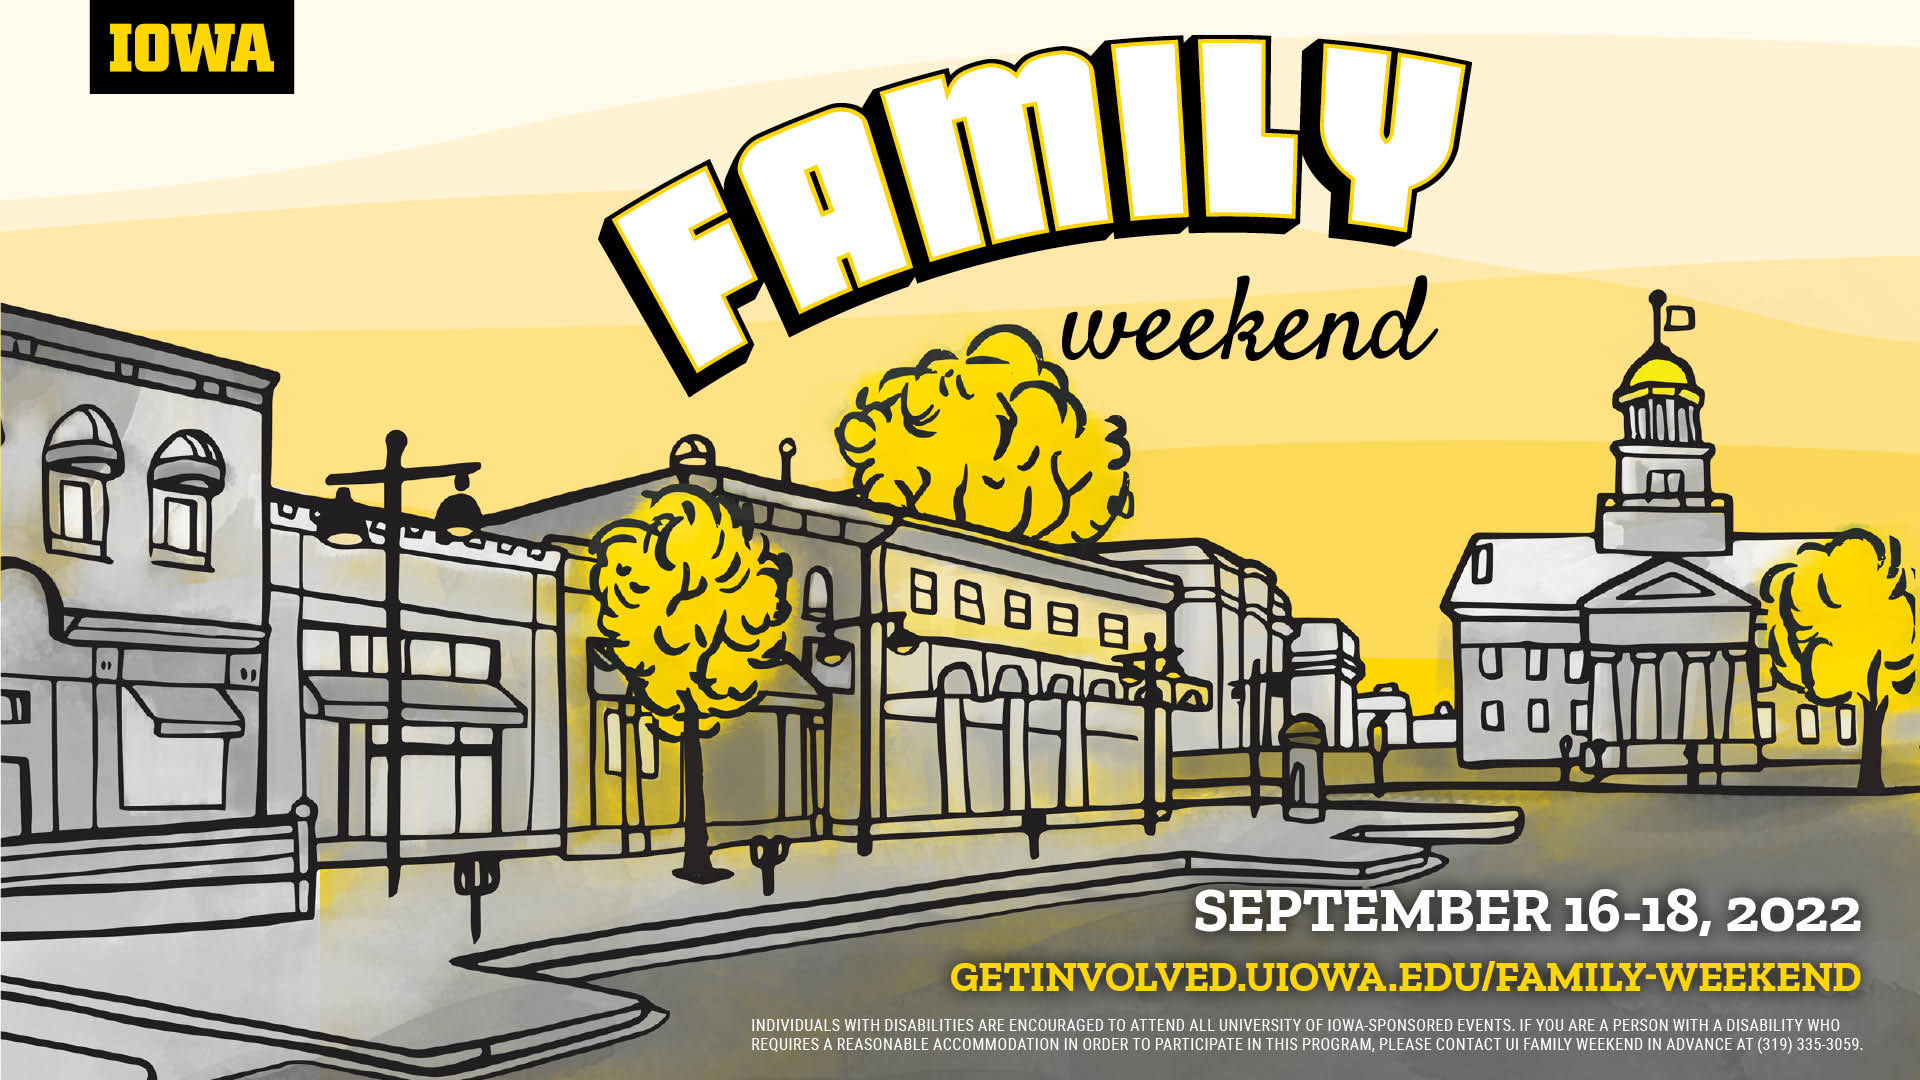 Family Weekend September 16-18, 2022. For more information, visit getinvolved.uiowa.edu/familyweekend